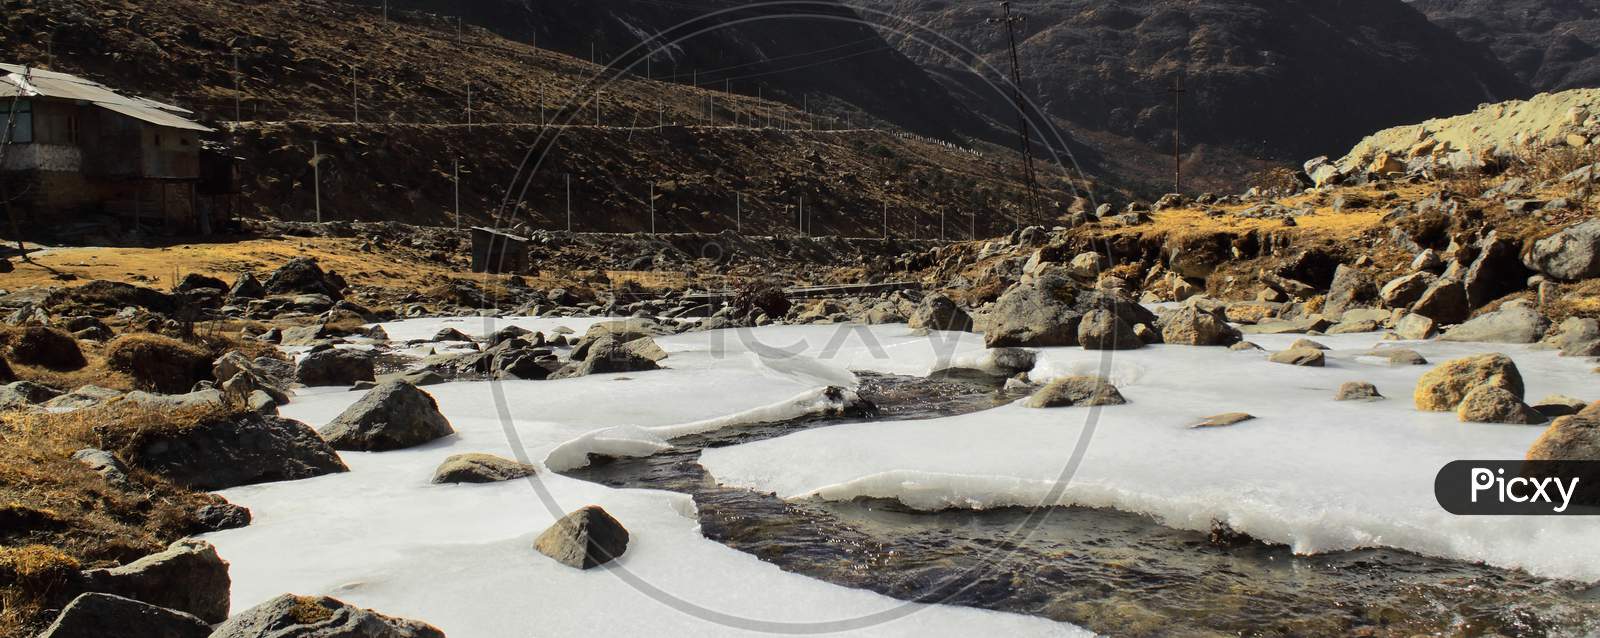 frozen stream (nuranang chu river) and valley in winter season near sela pass in tawang, arunachal pradesh, north east india